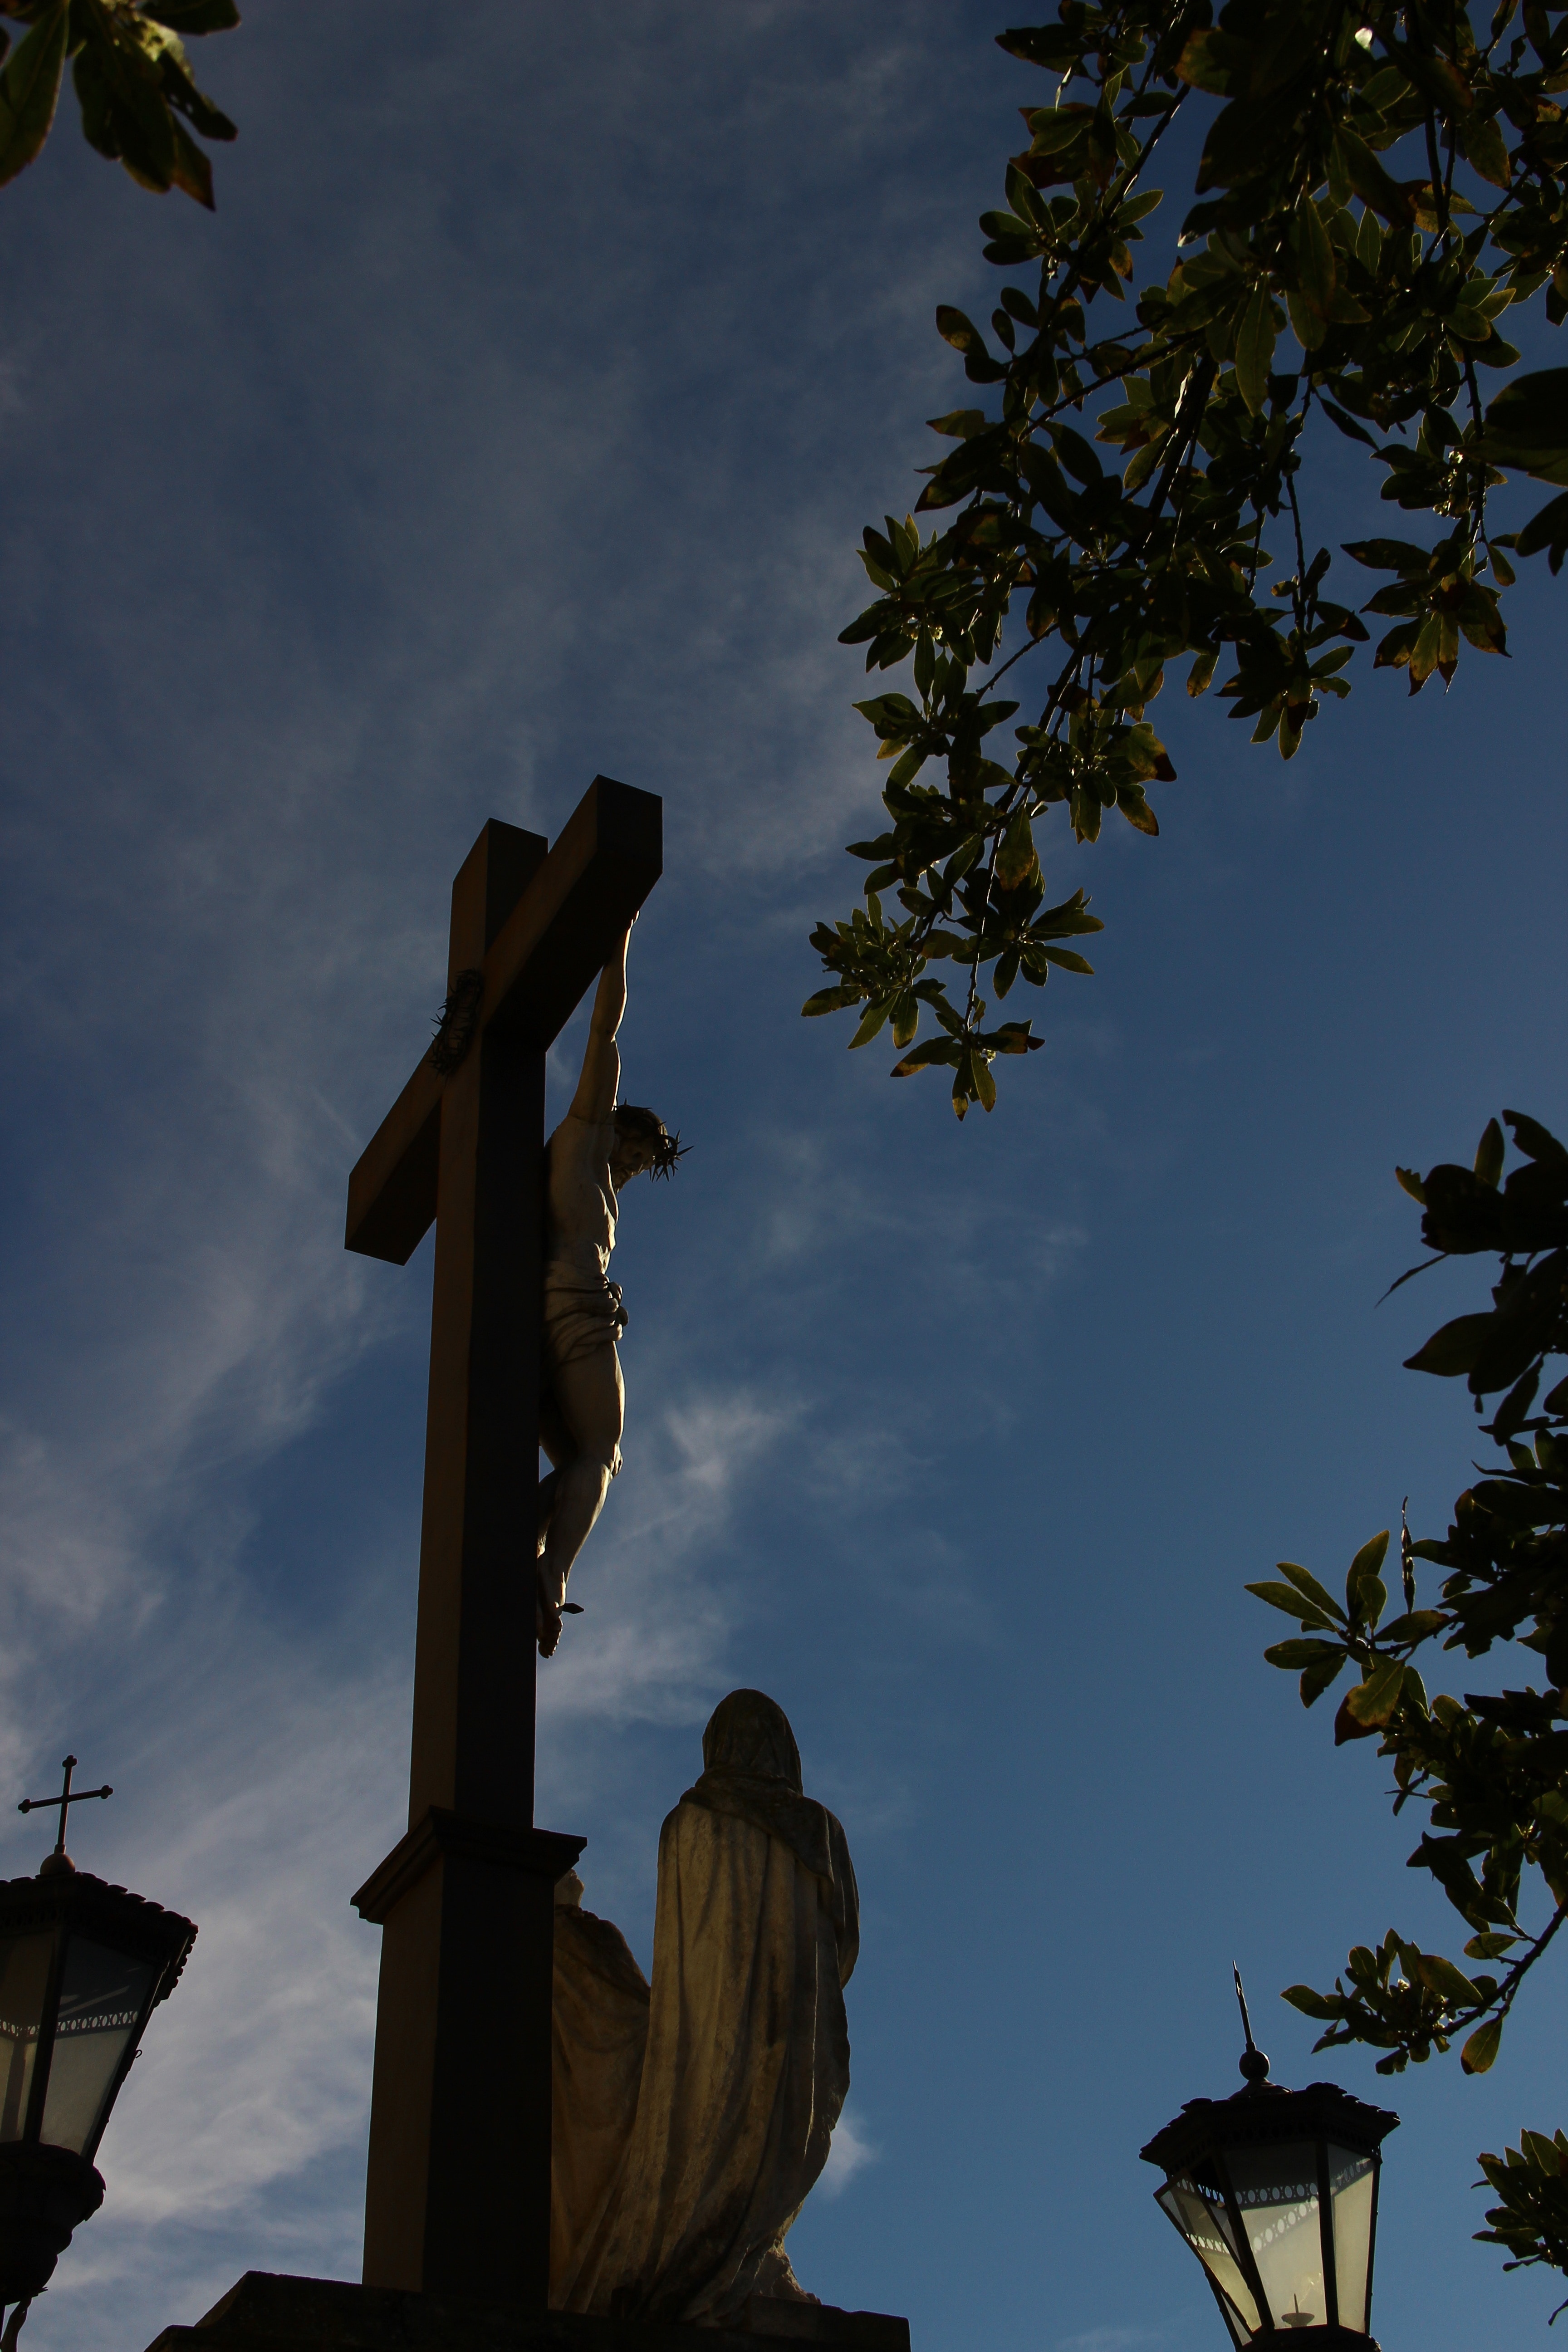 crucifix and mama mary statue